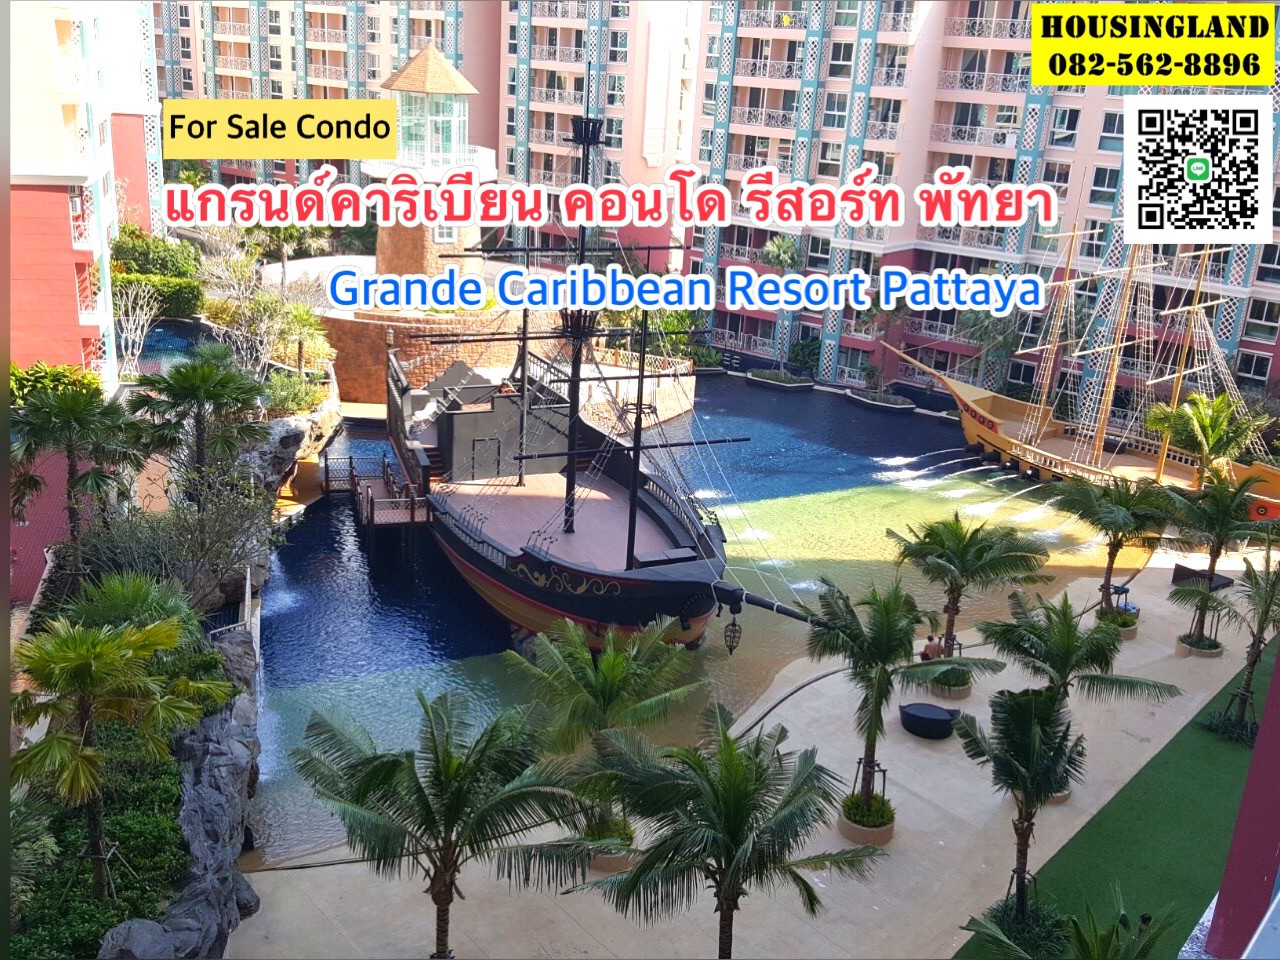 Selling Grand Caribbean Condo Resort Pattaya, 6th floor, Nong Prue Subdistrict, Bang Lamung District, Chonburi Province.